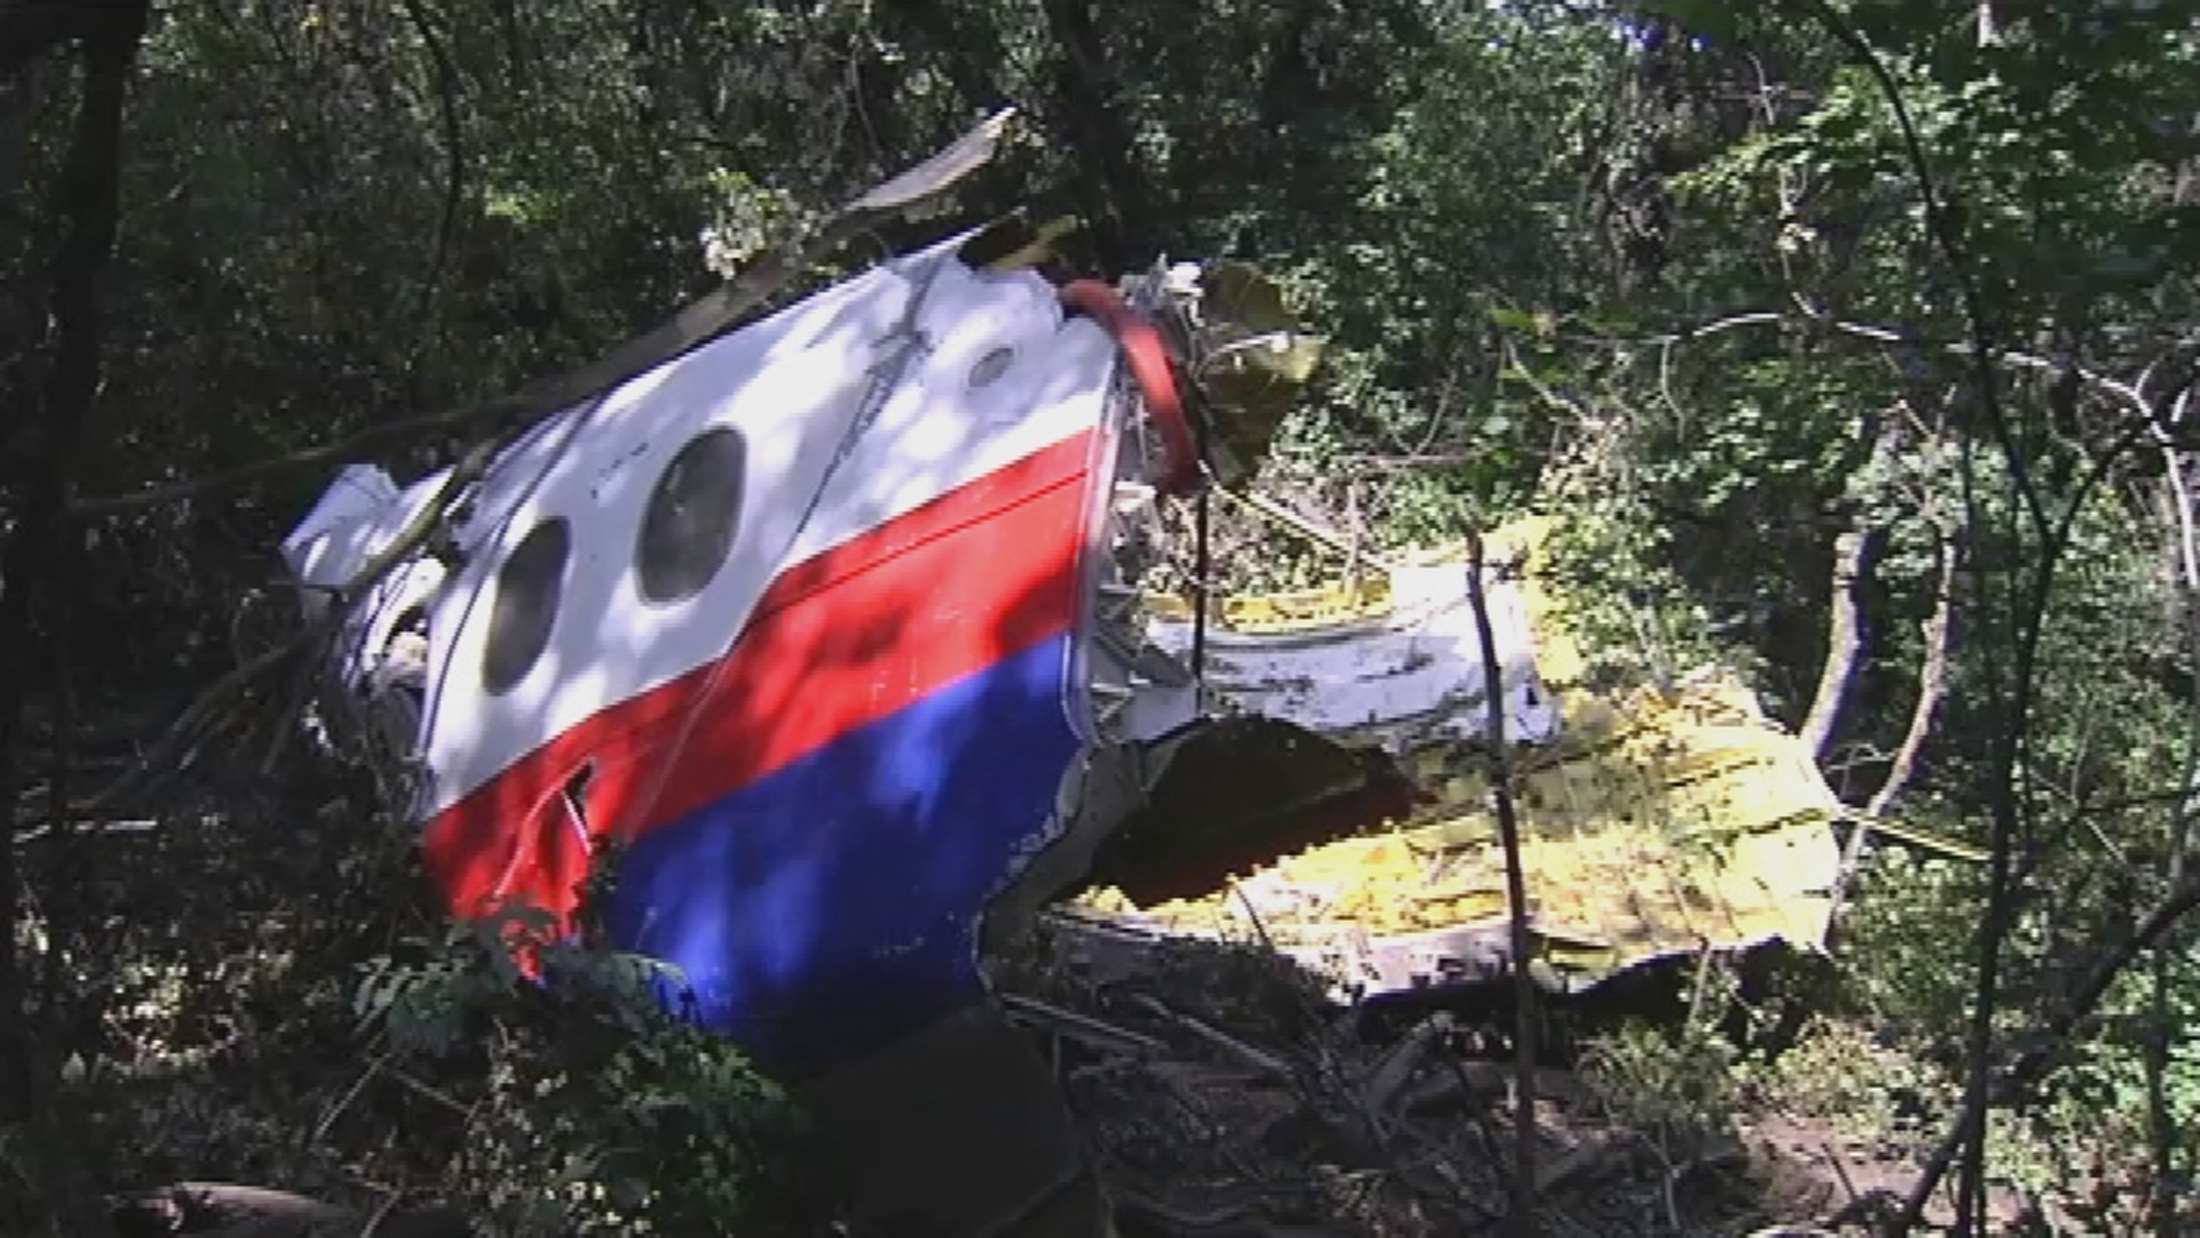 Dutch, Australians ready MH17 troops amid Ukraine deadly fighting